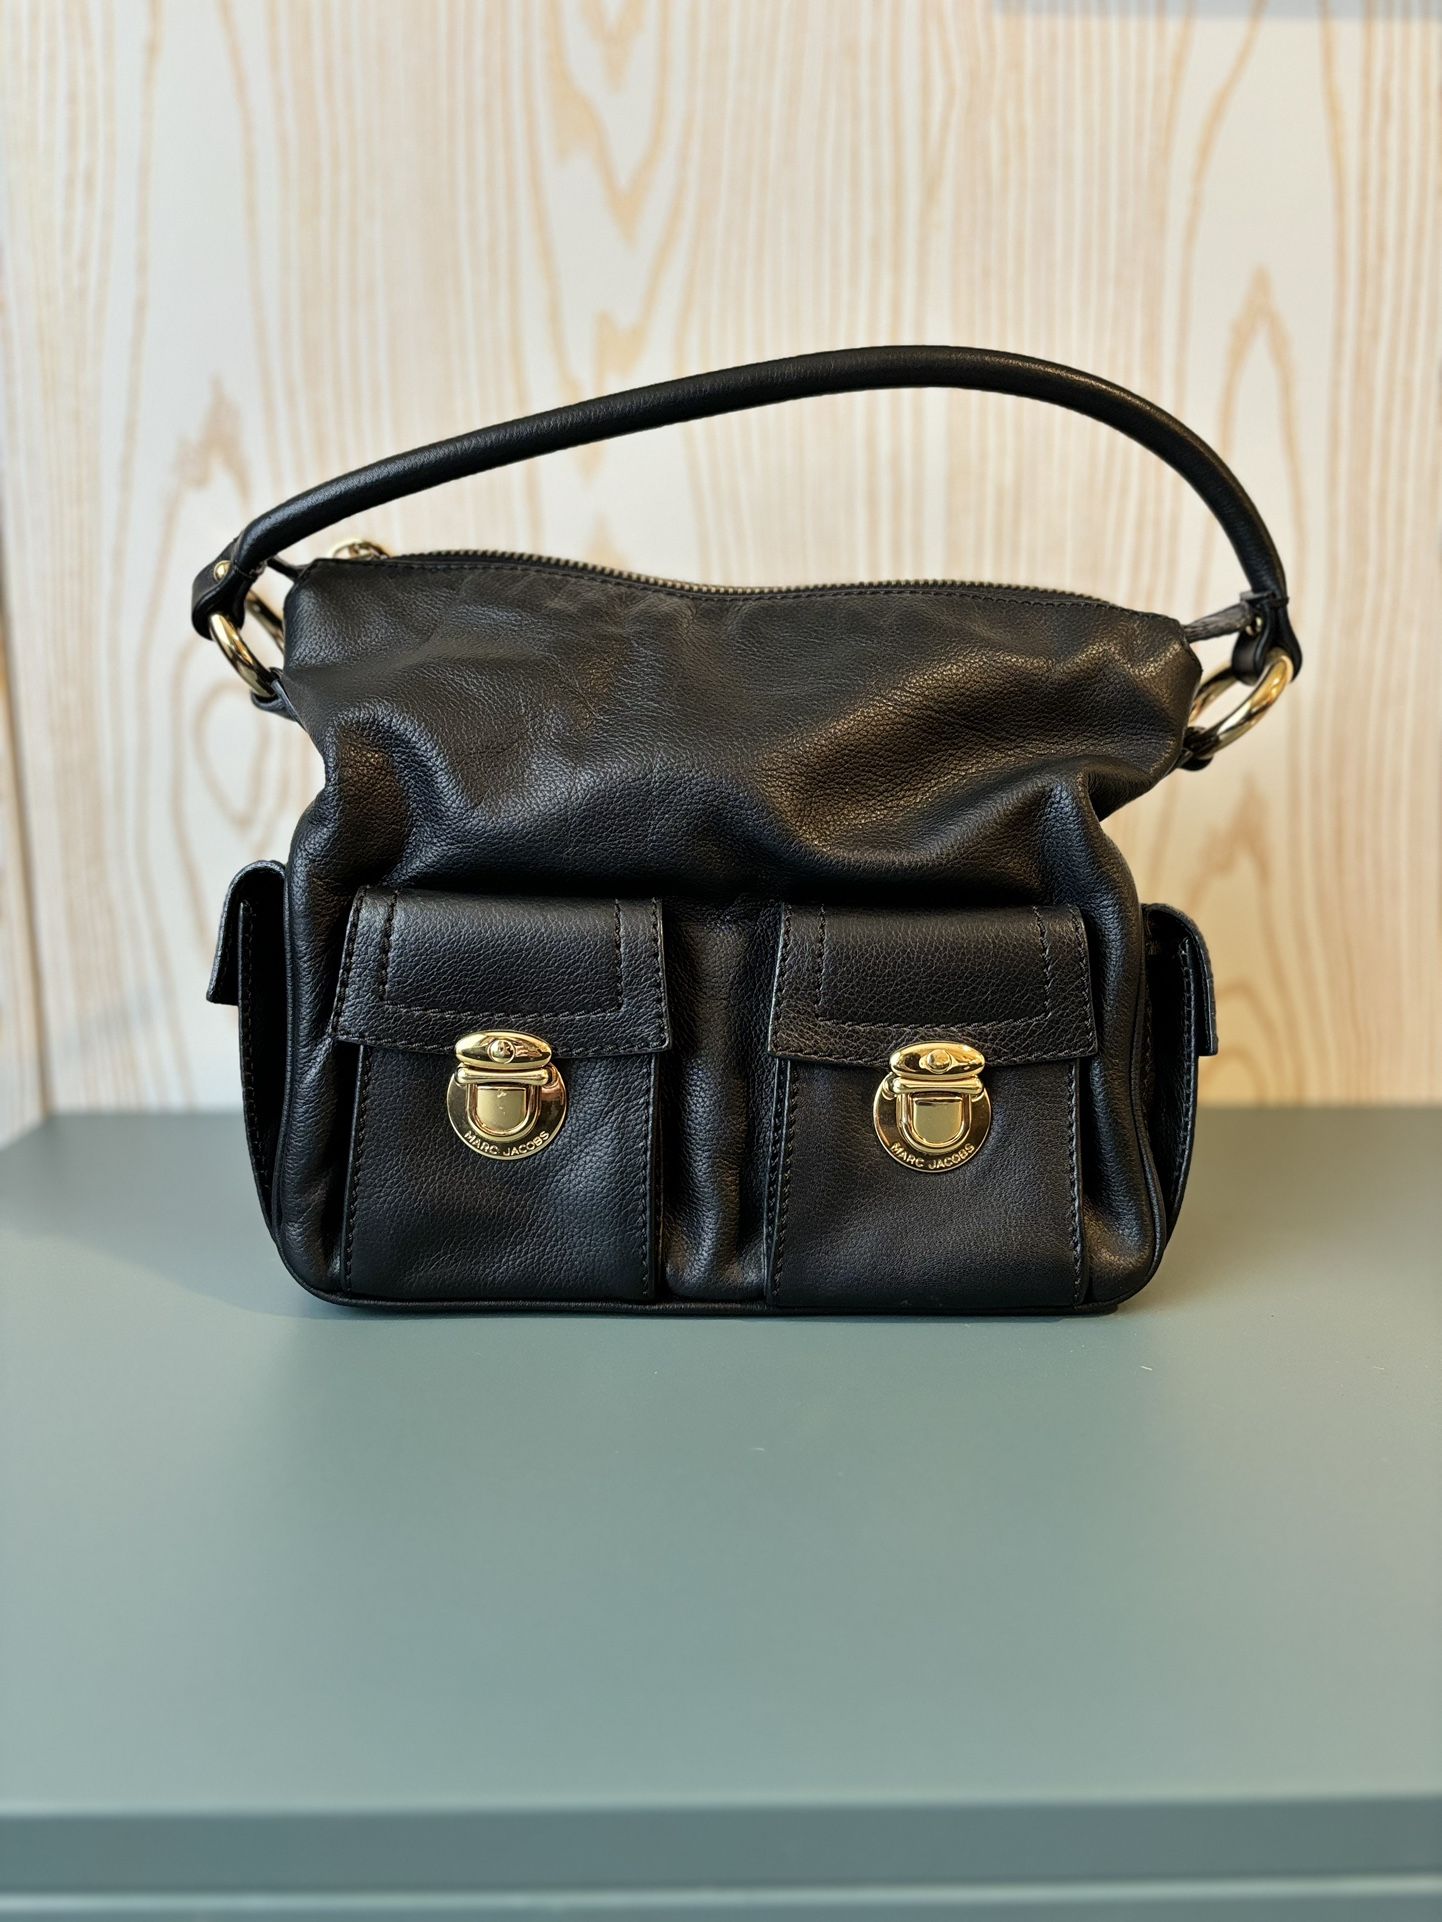 Gorgeous Marc Jacobs black shoulder bag